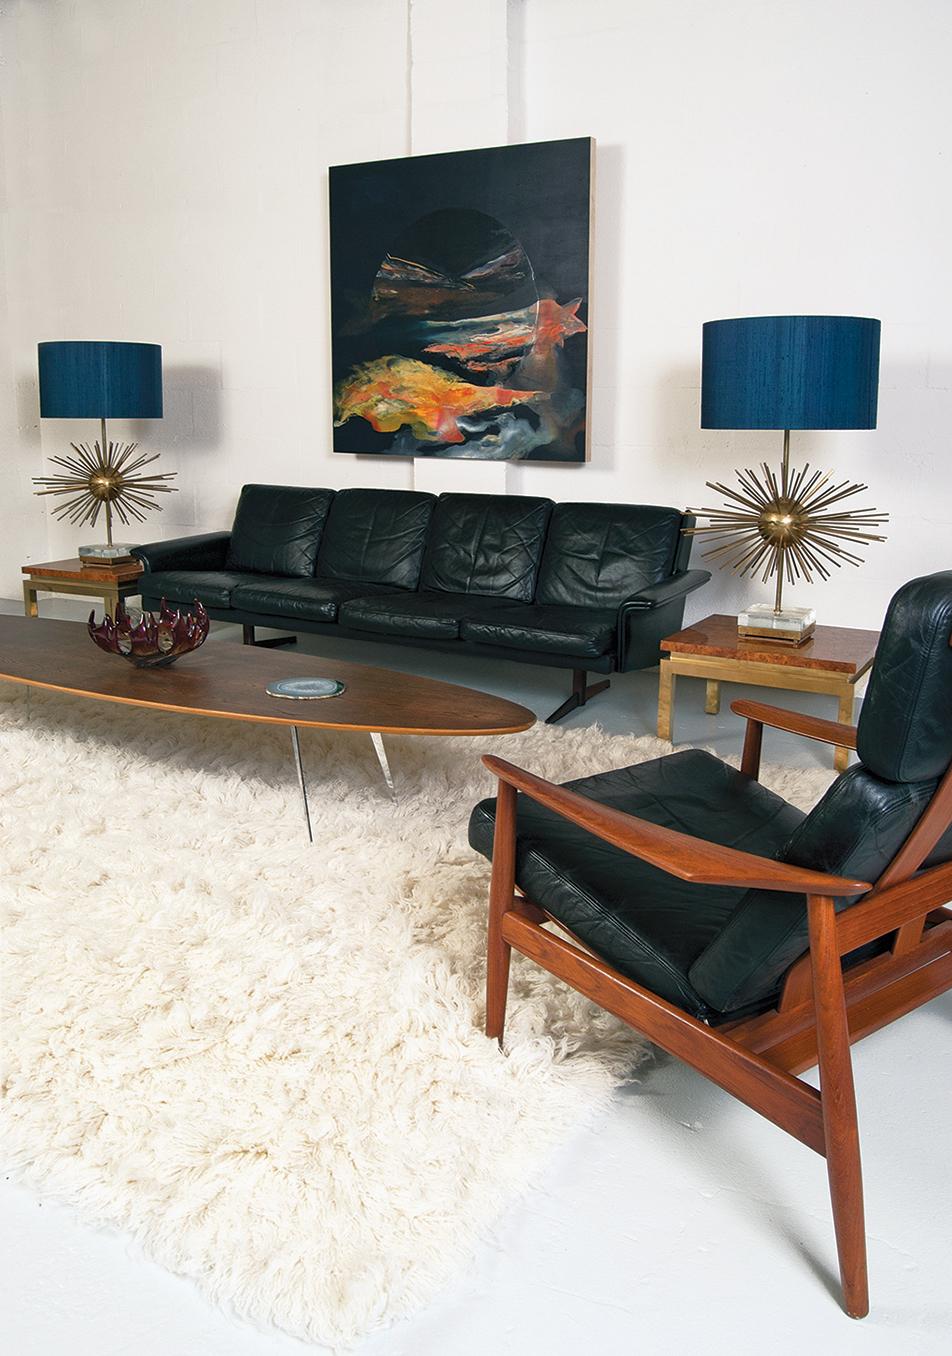 Veneer Midcentury Danish Leather 3-piece Lounge Suite by Komfort designed HW Klein 60s